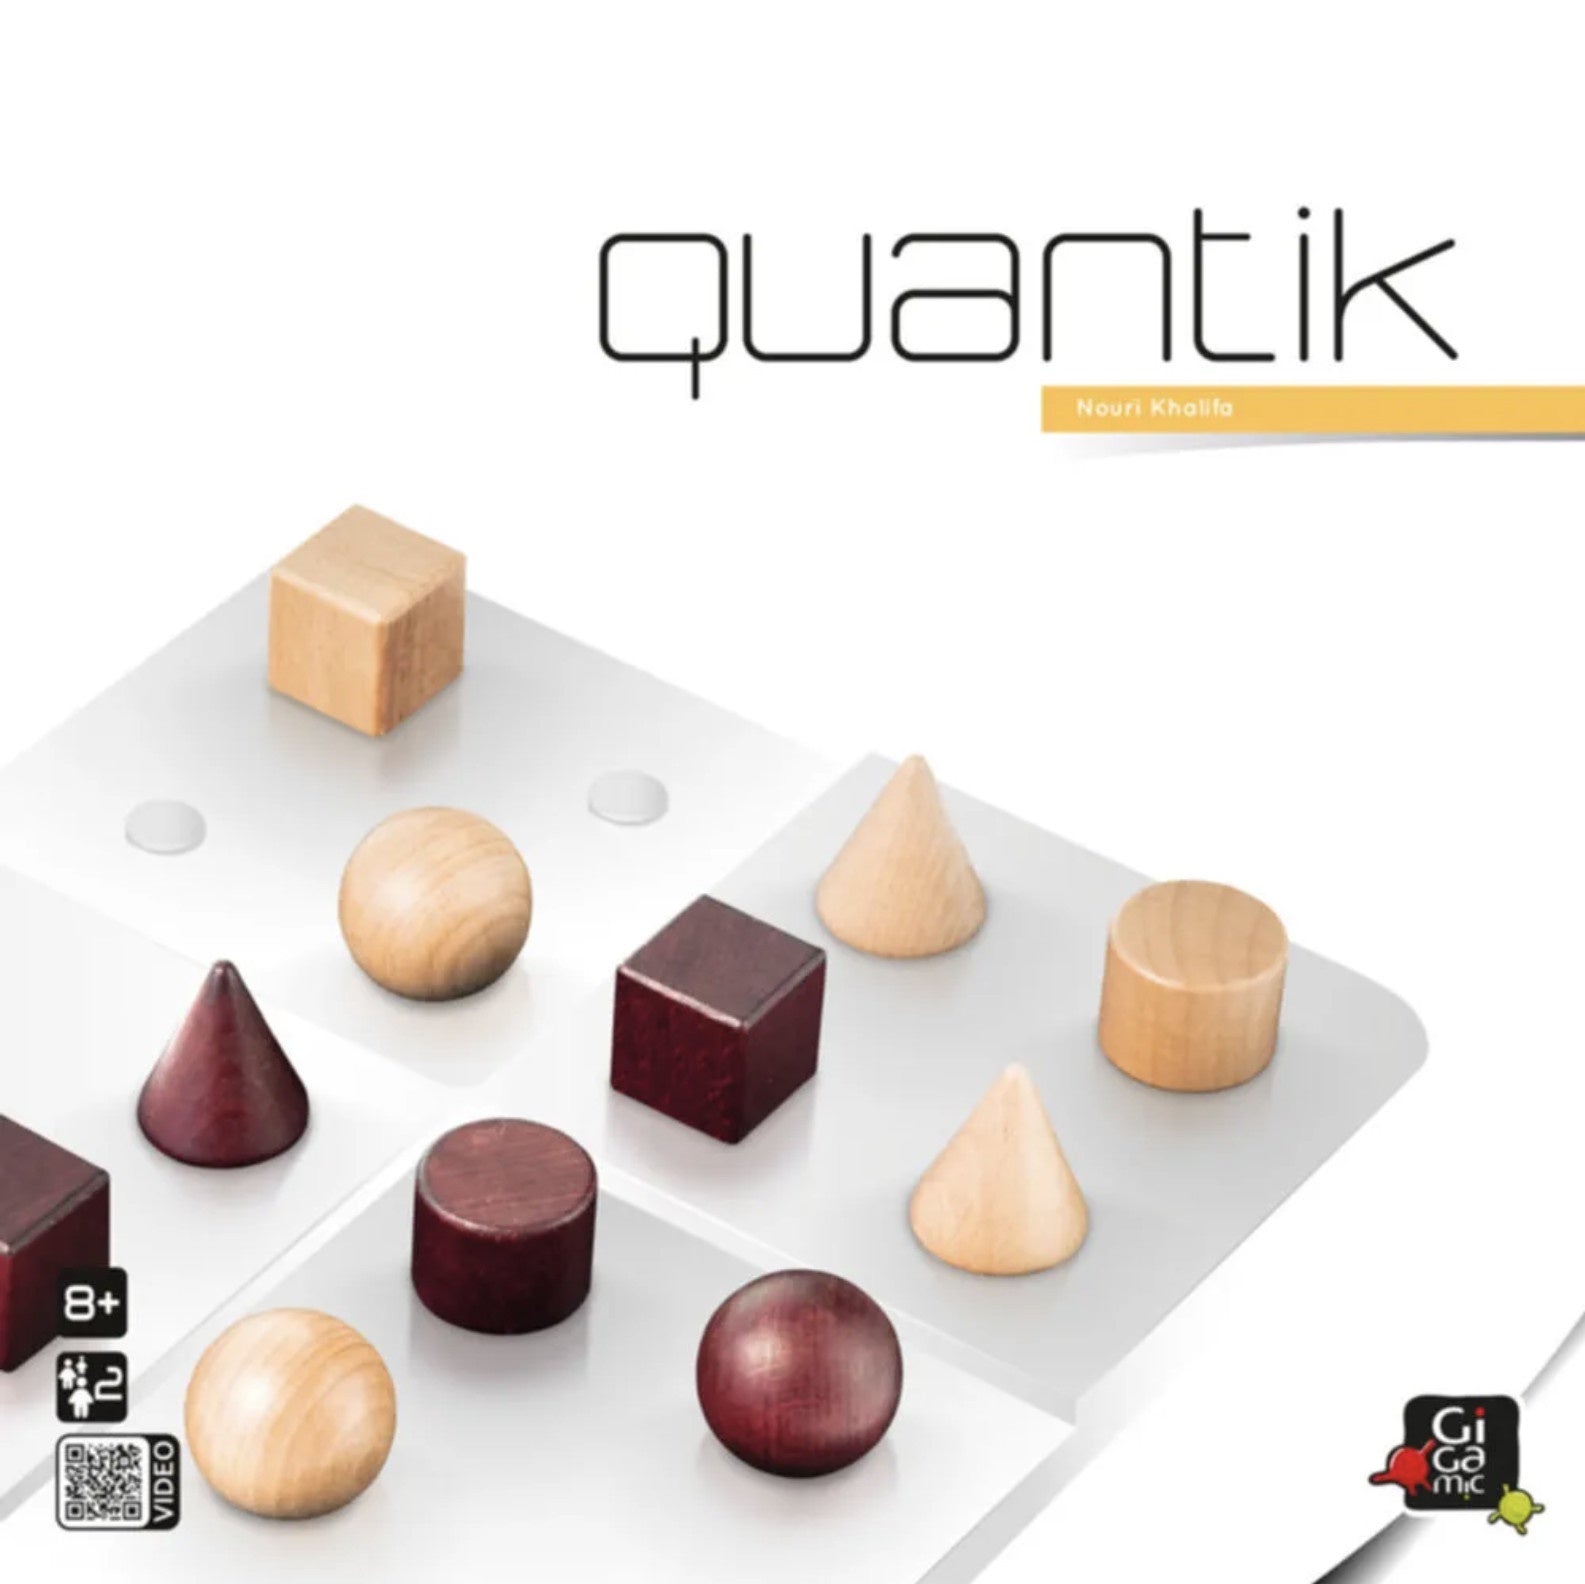 Quantik - Wooden Game  - Mini